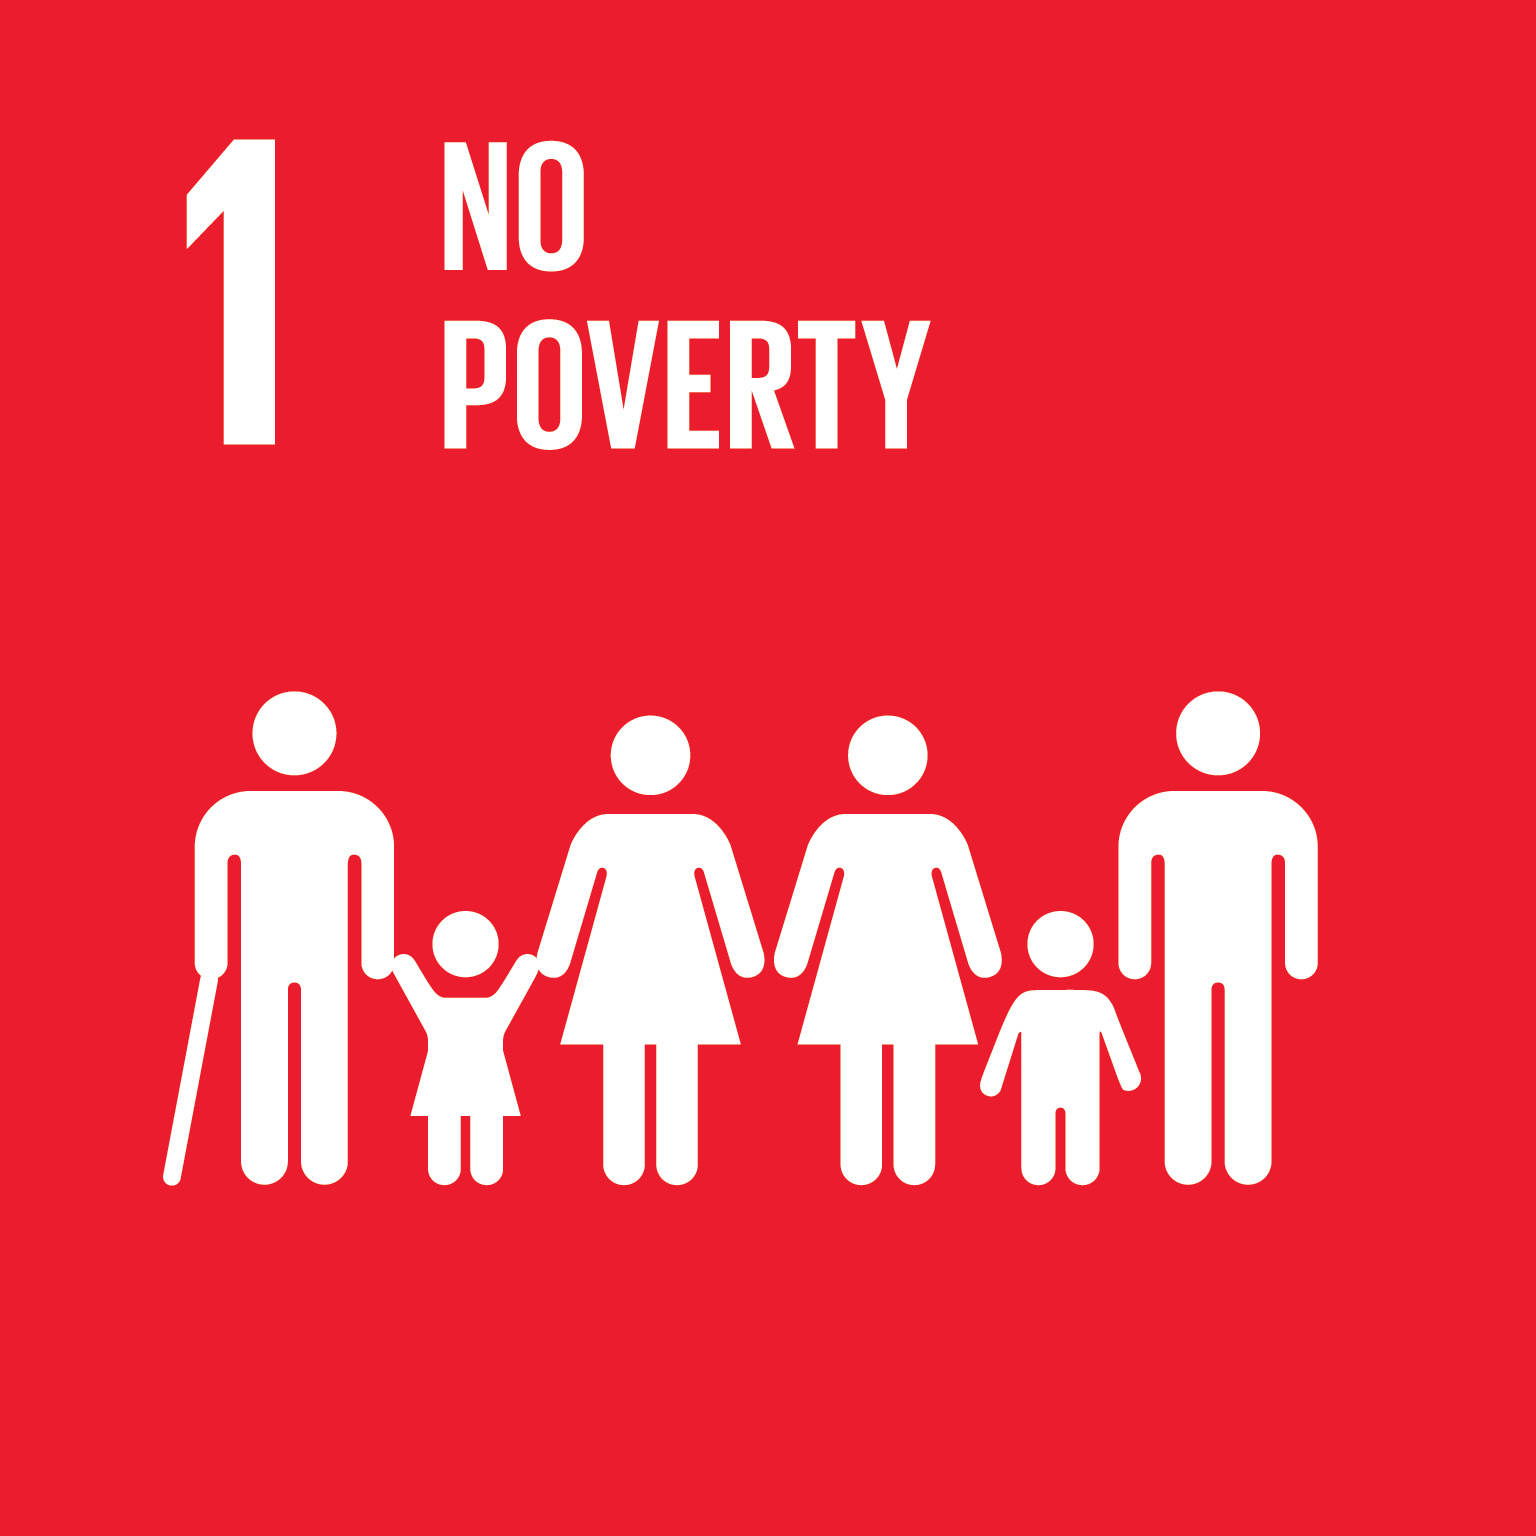 SDGs Goal 1 No Poverty cover image